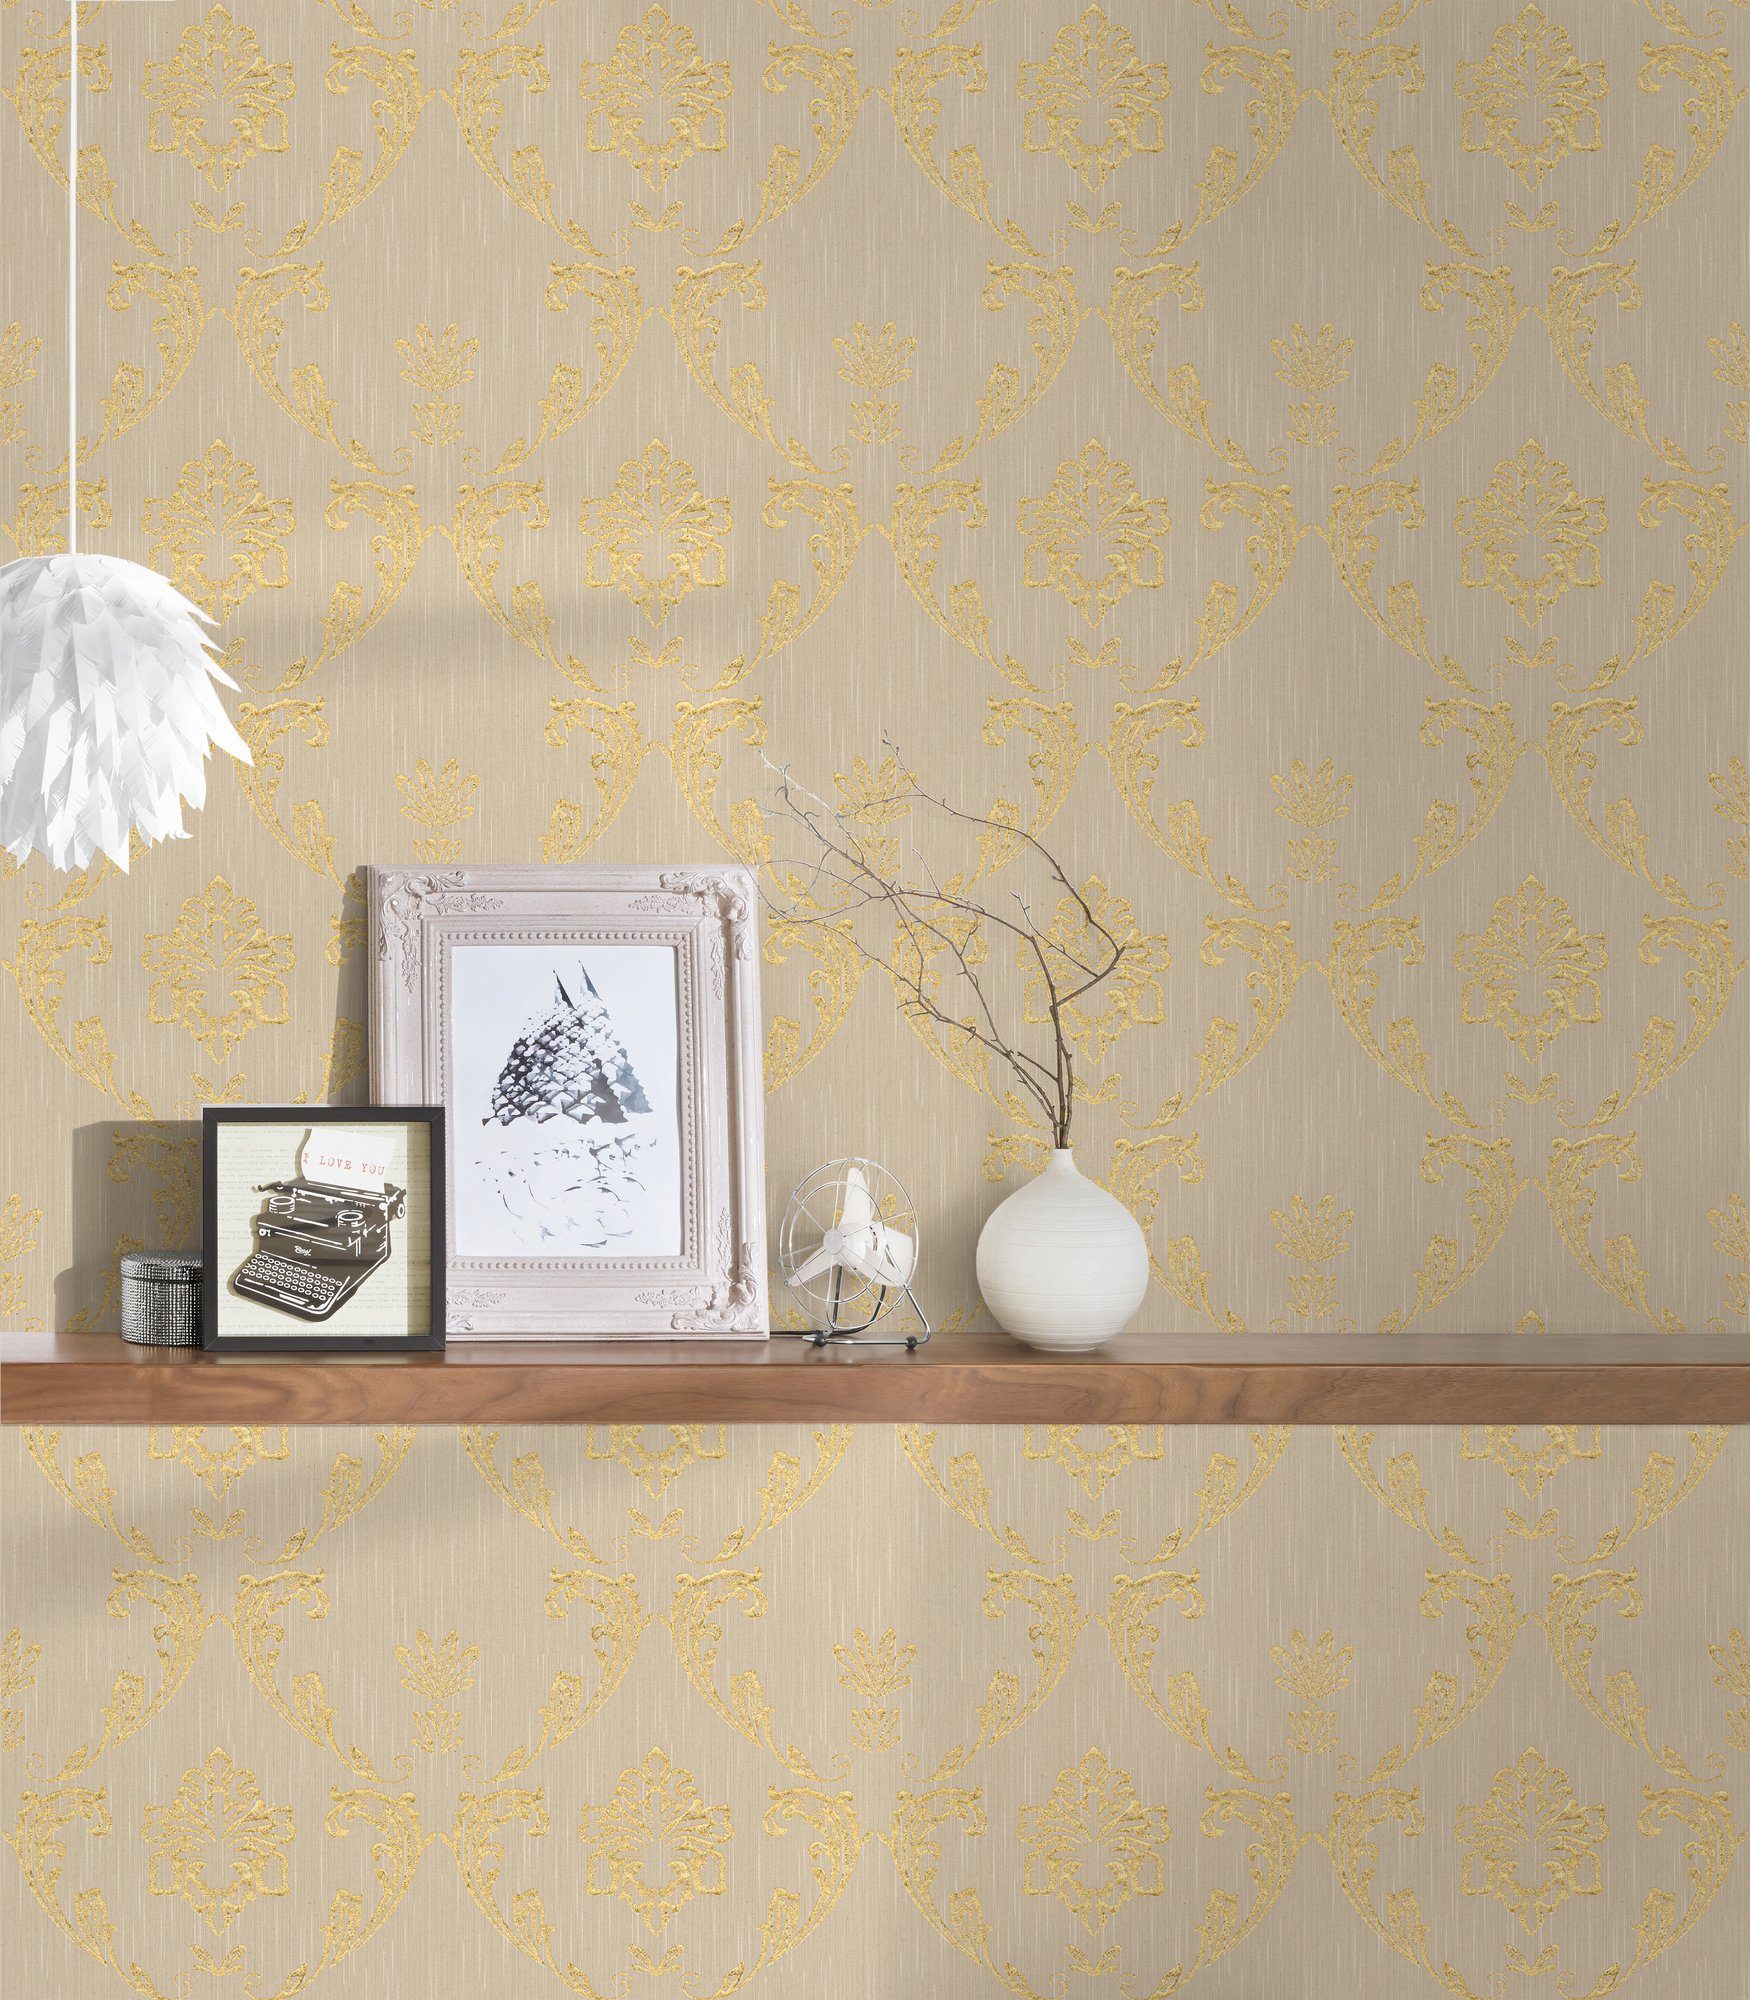 Architects Paper Textiltapete Metallic Silk, Ornament Barock, Tapete glänzend, matt, samtig, gold/hellbeige Barock